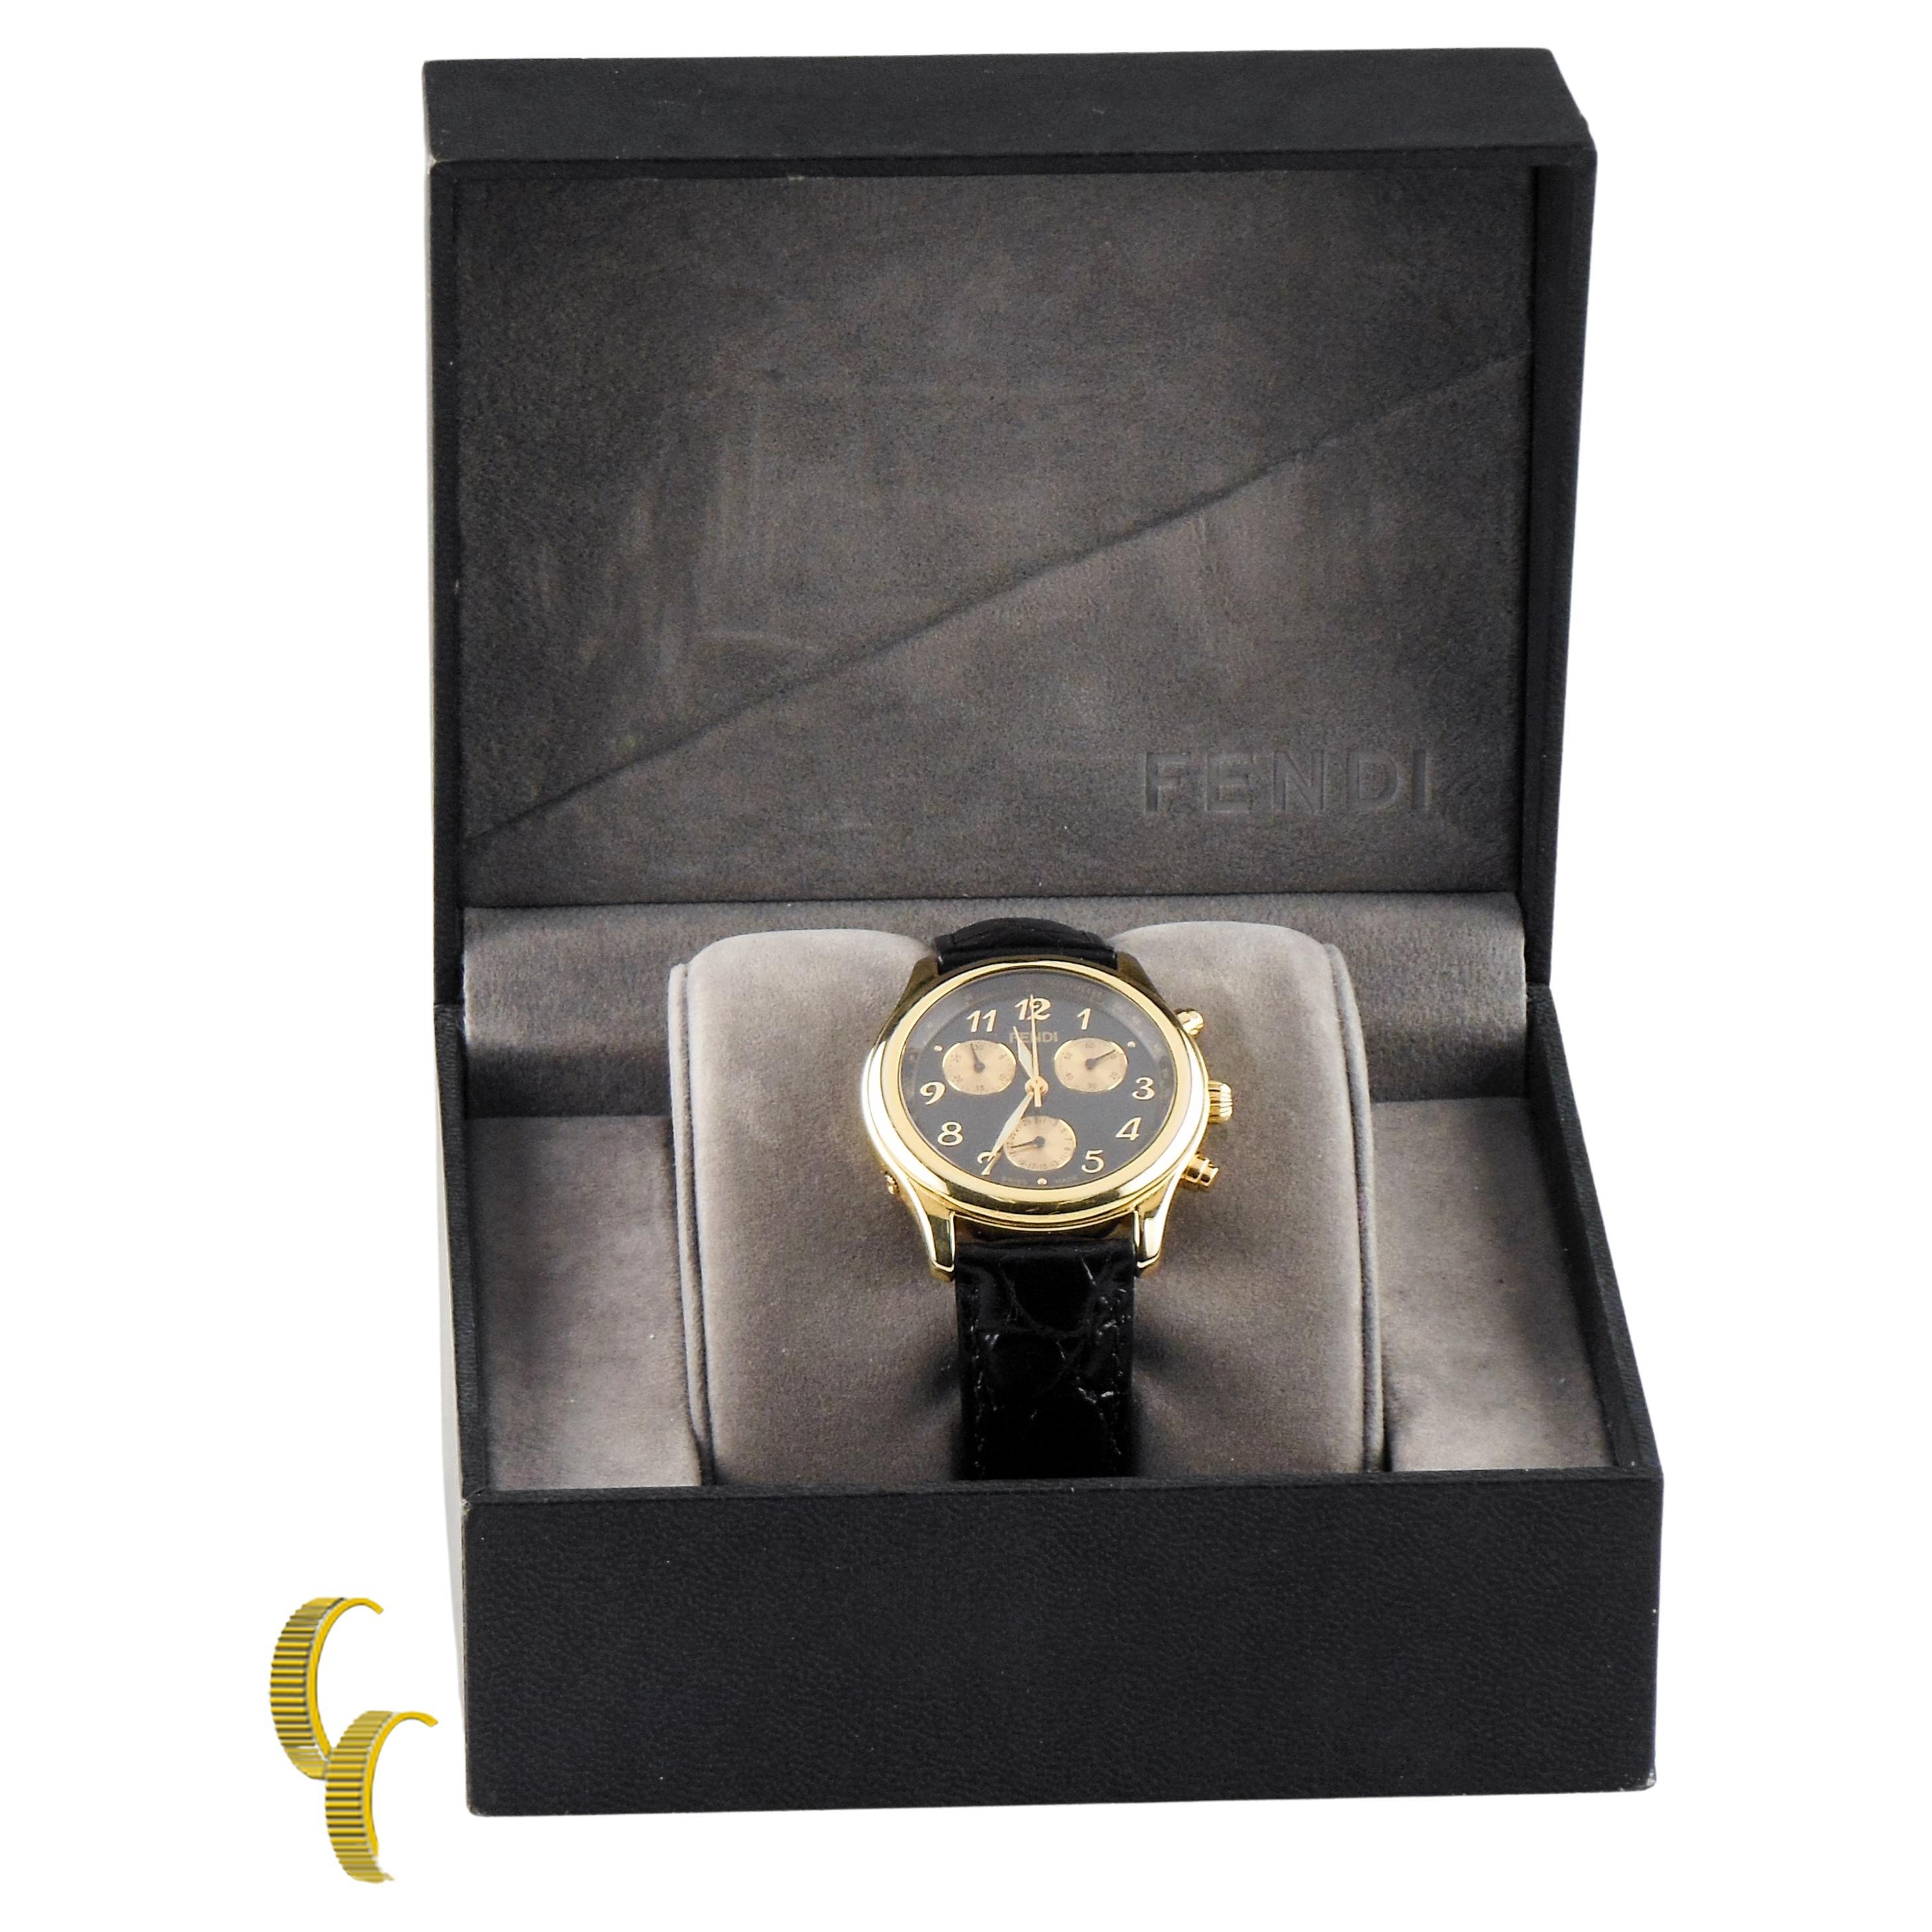 Fendi 18 Karat Gelbgold Chronographuhr mit Lederband im Angebot